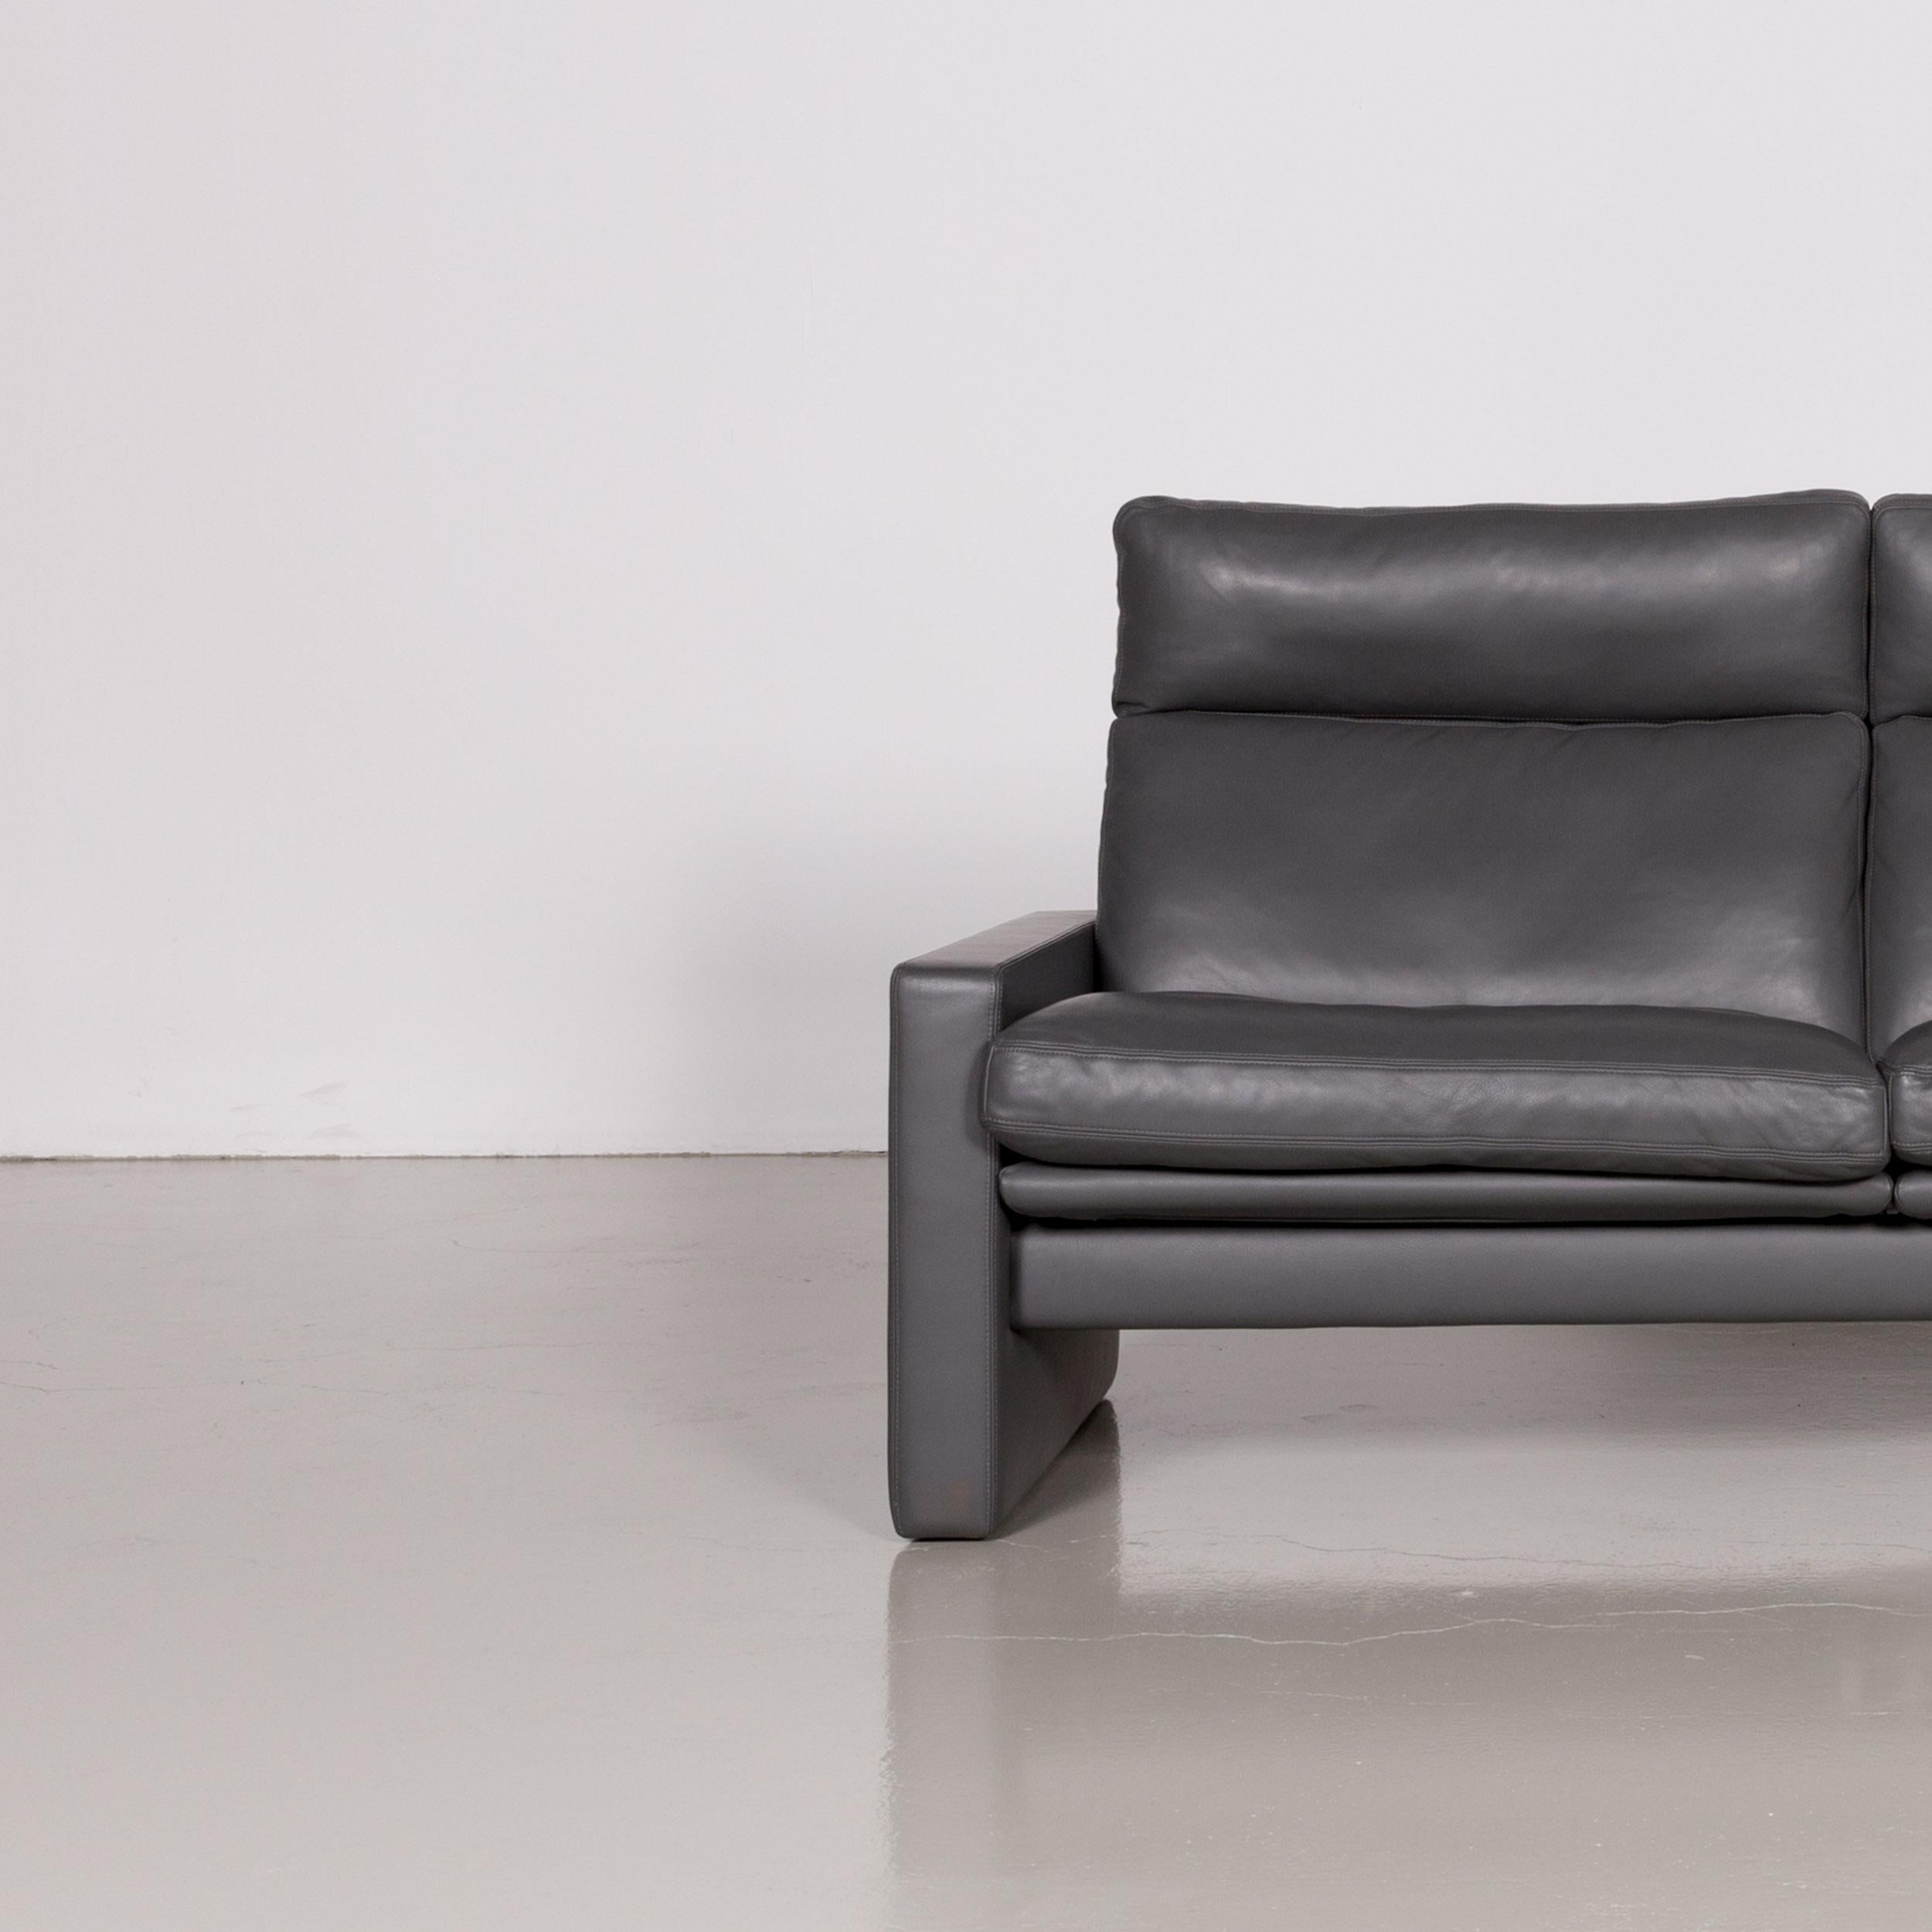 German Erpo Manhattan Designer Leather Sofa in Anthracite Grey Three-Seat Couch